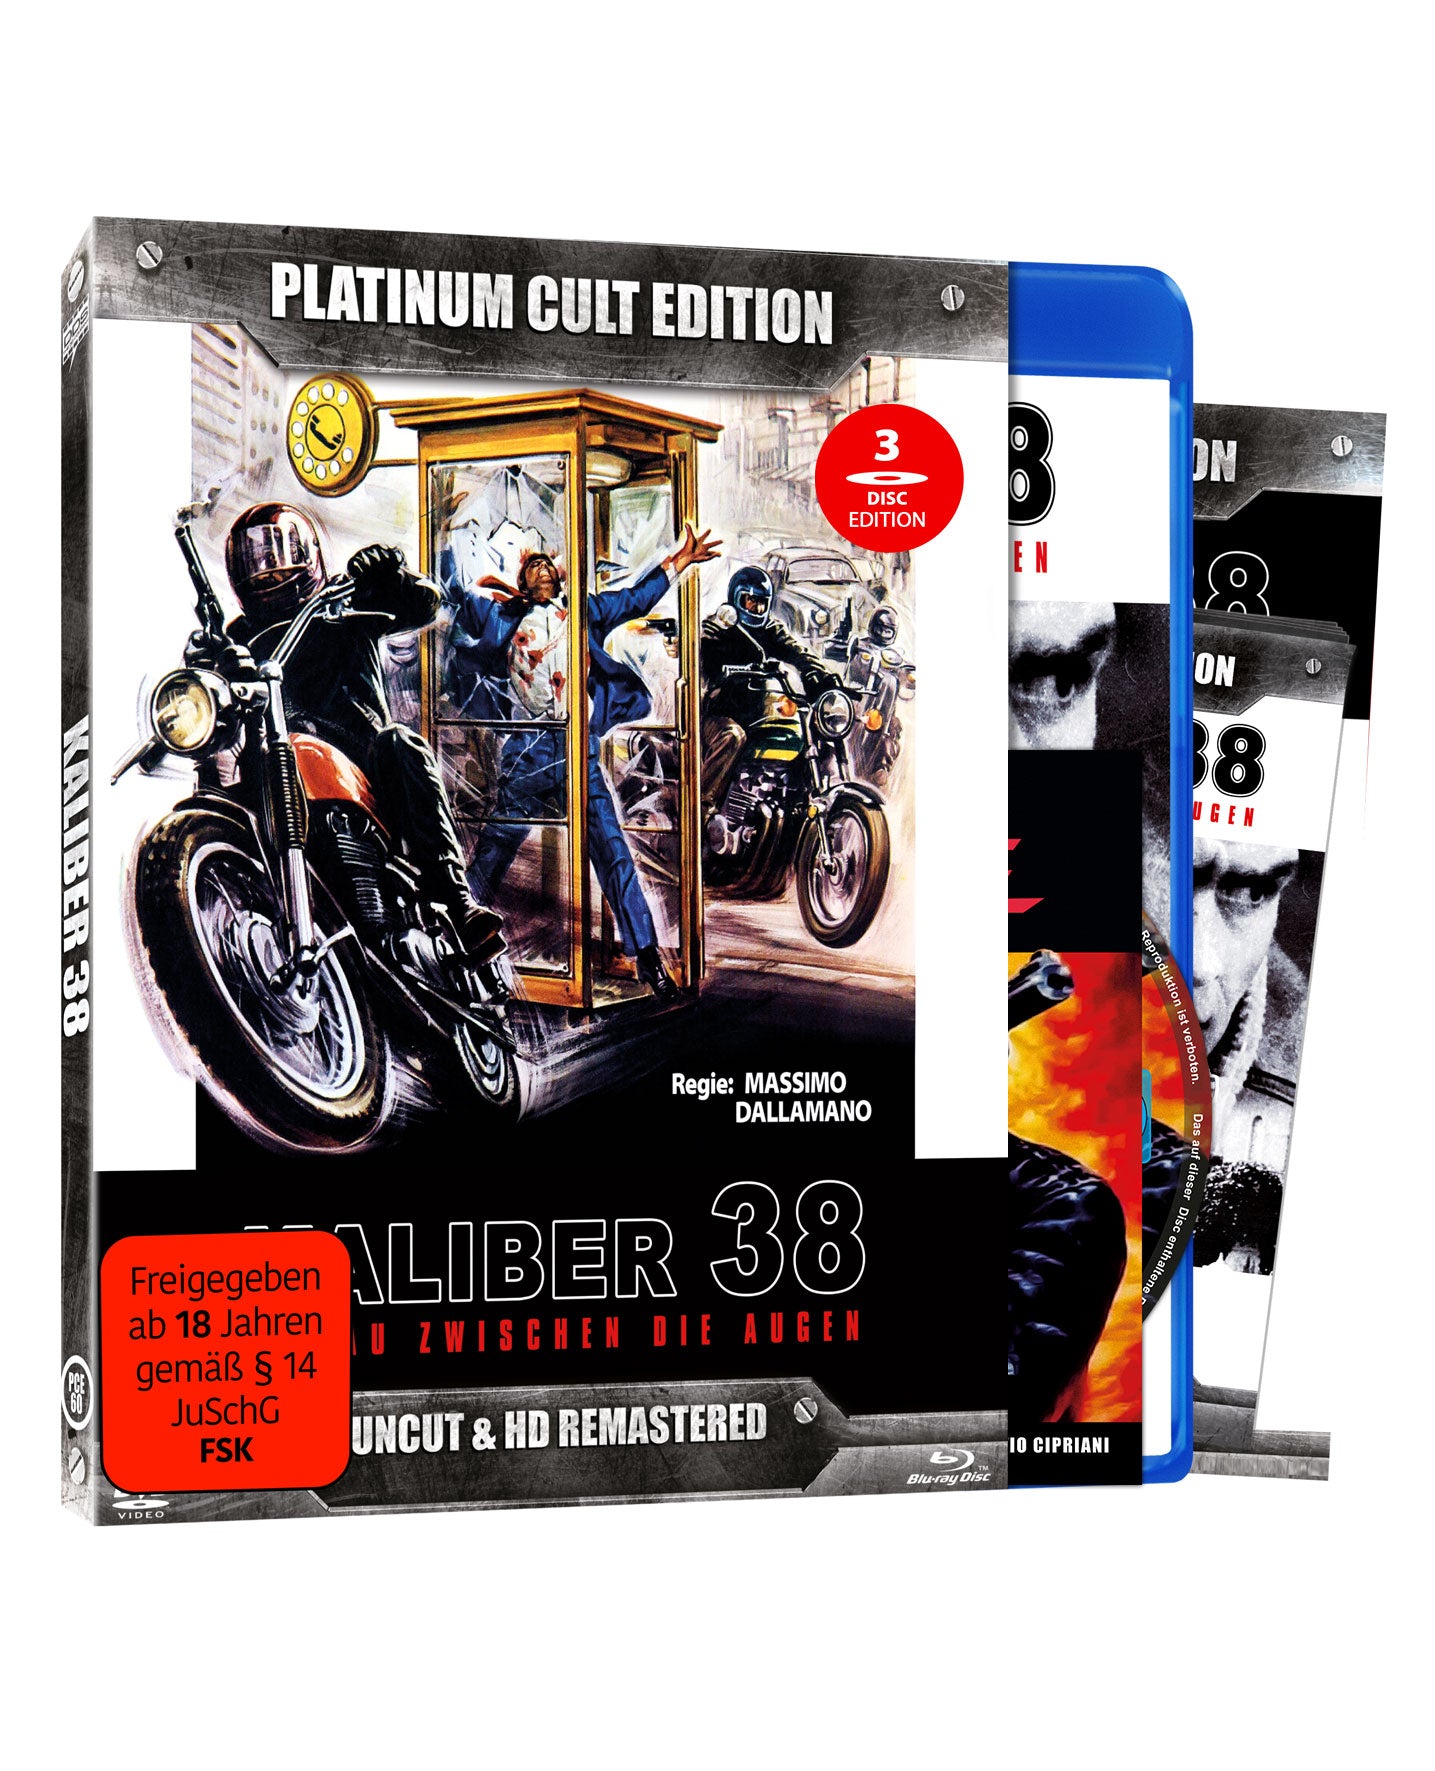 Kaliber 38 - PCE - 2 Disc Edition (BD & DVD)